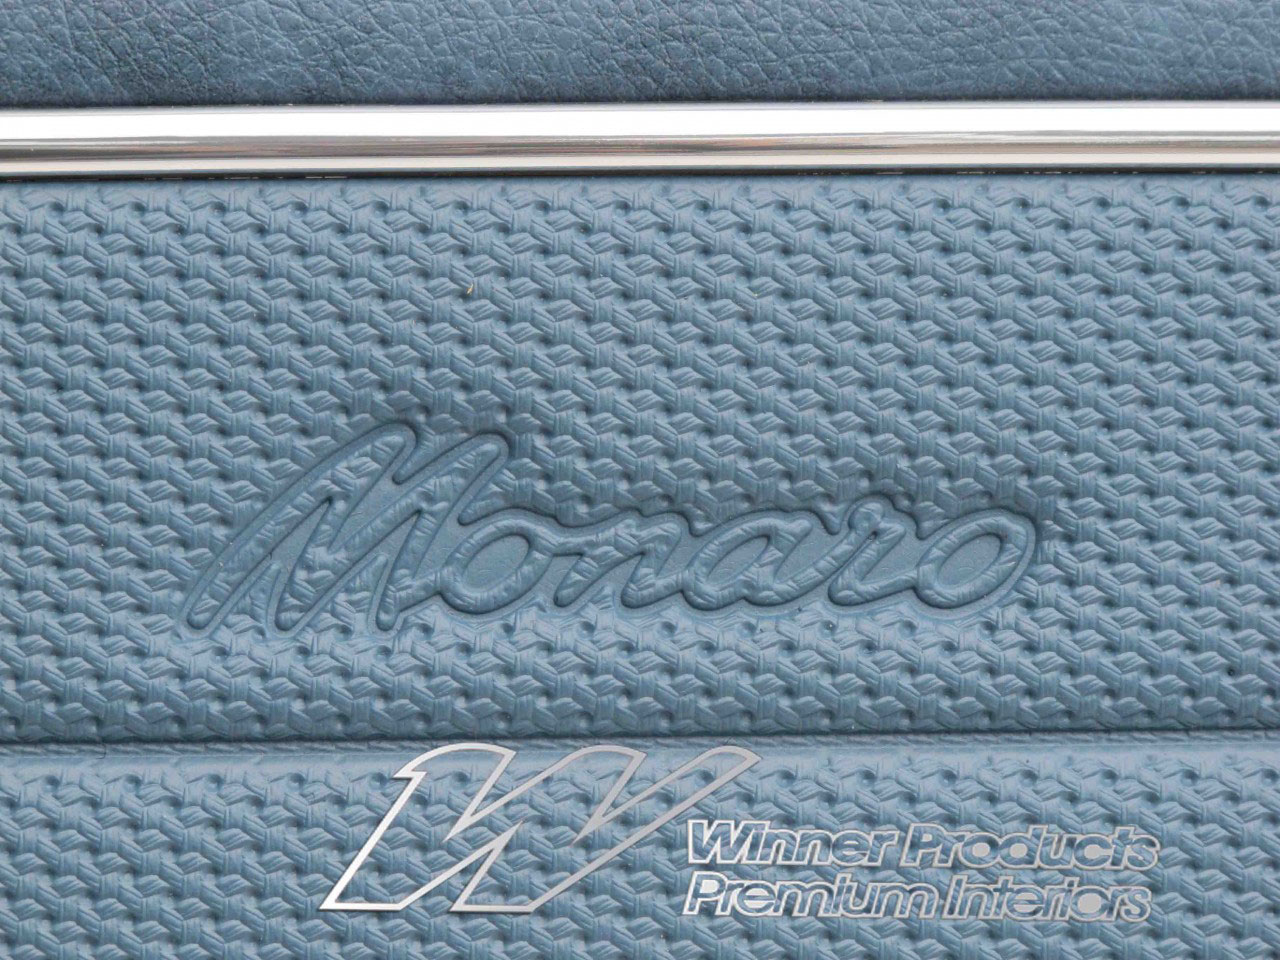 Holden Monaro HT Monaro GTS Coupe 14Y Twilight Blue & Houndstooth Door Trims (Image 4 of 5)